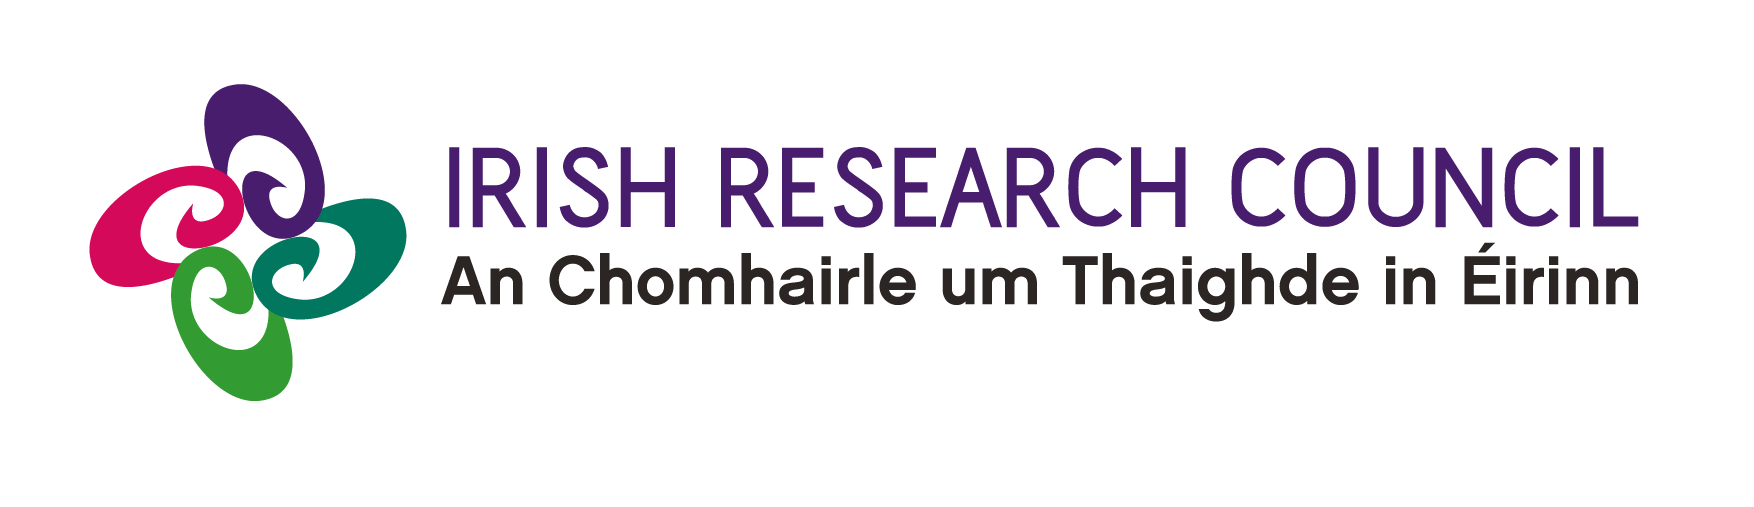 IrishResearchCouncil Logo